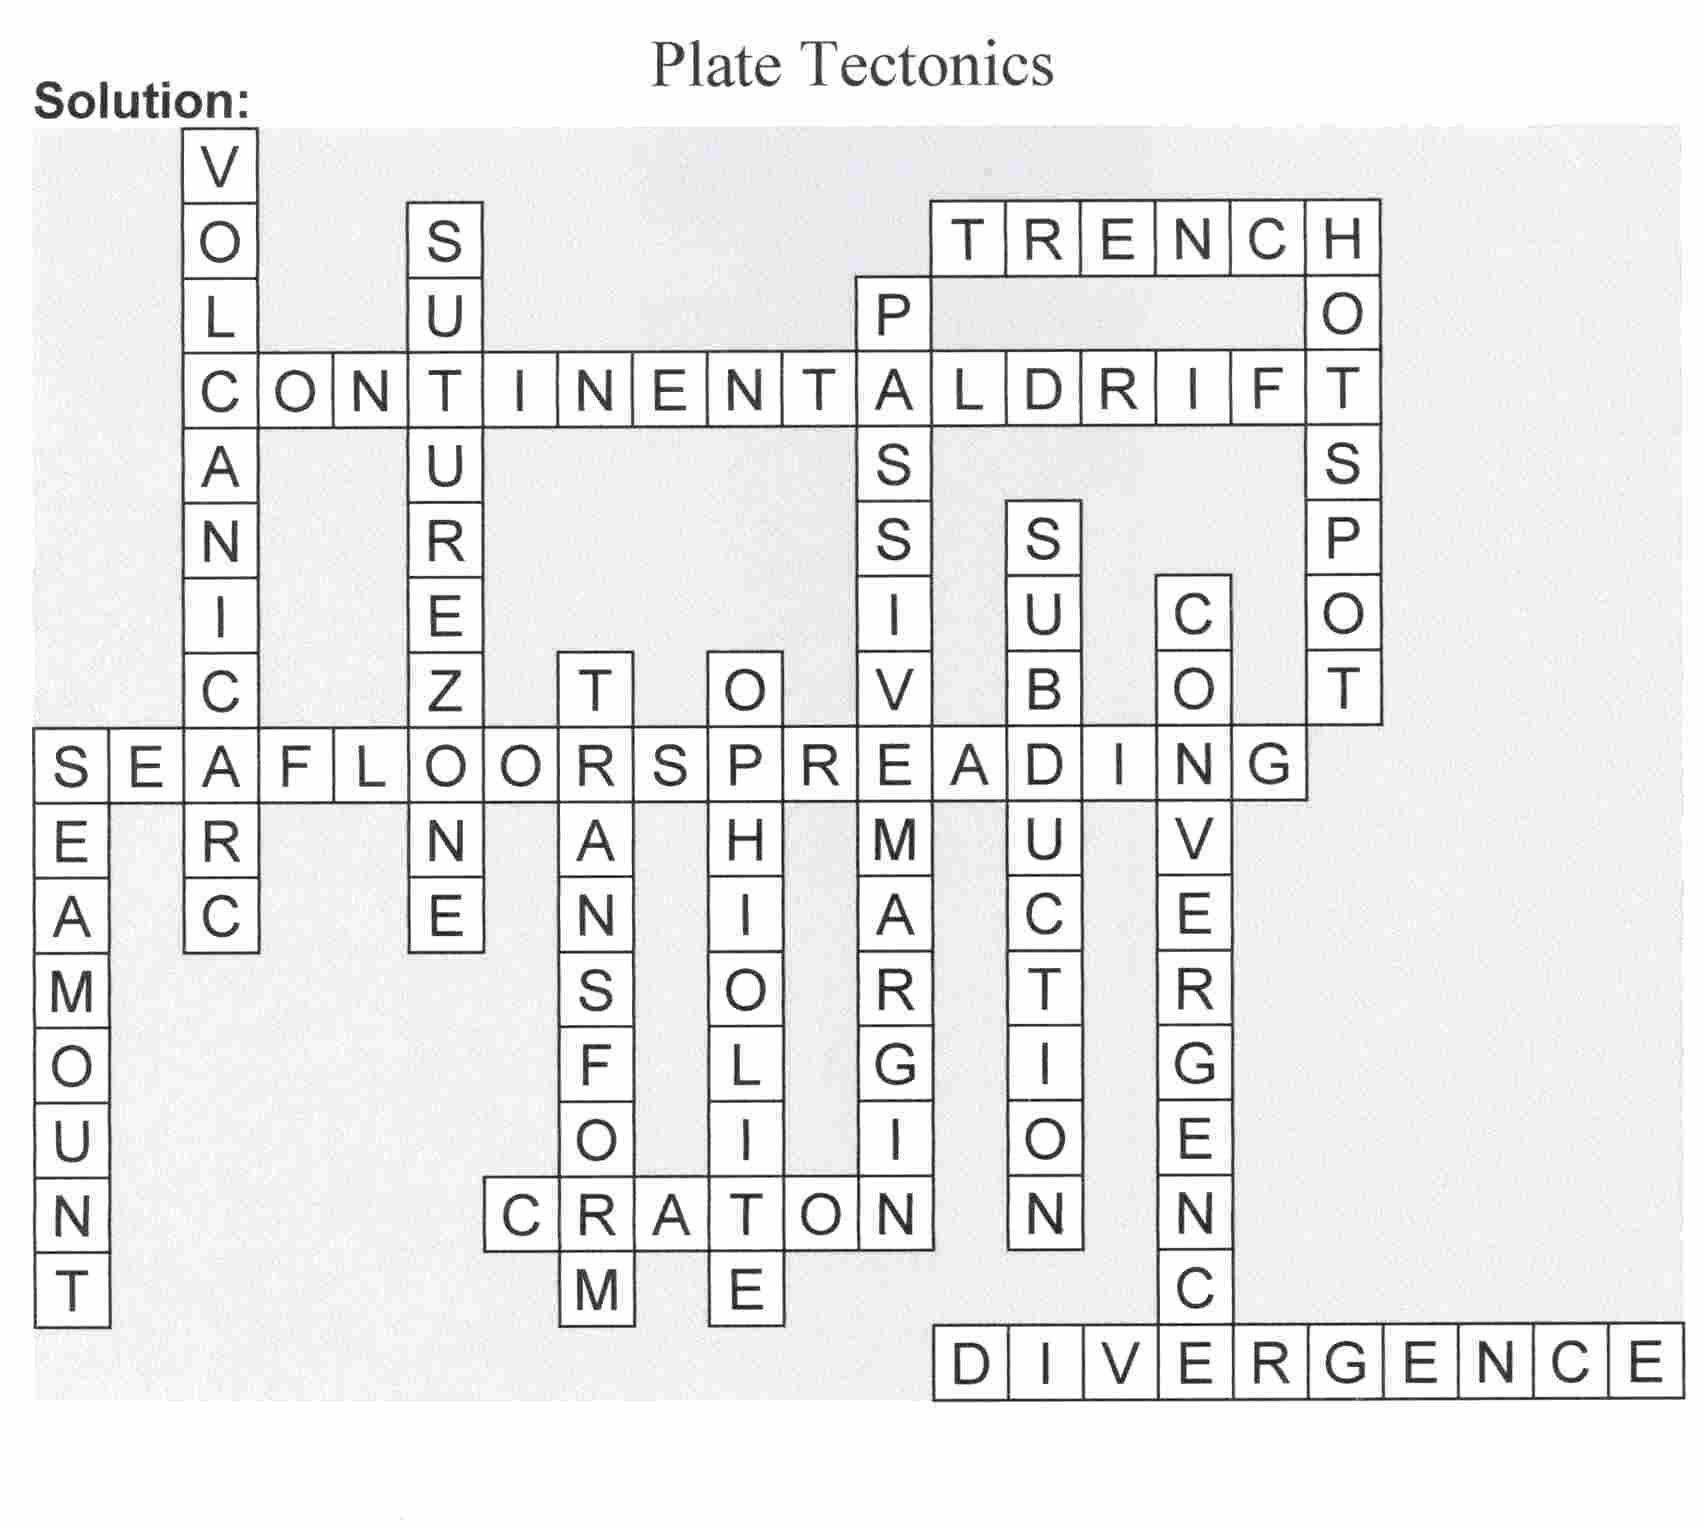 Worksheet Plate Tectonics Worksheets Misp Plate Tectonics For Plate Tectonics Crossword Puzzle Worksheet Answers